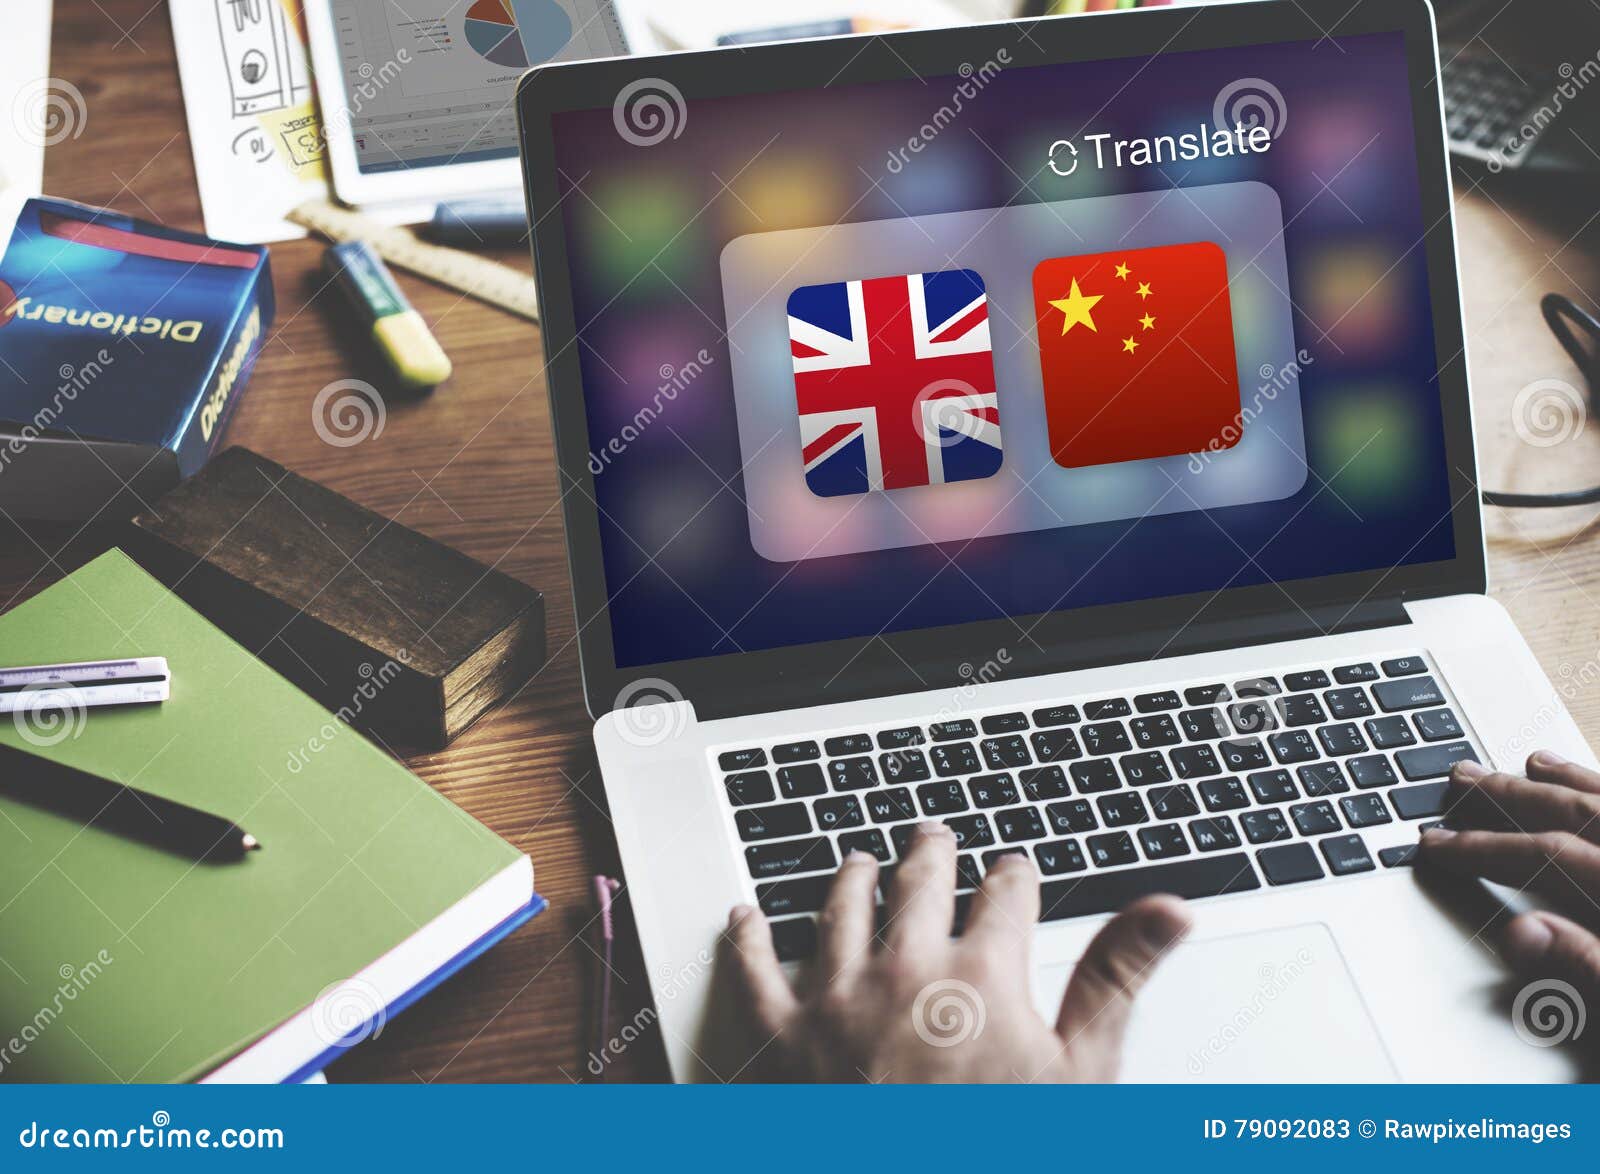 english chinese languages translation application concept